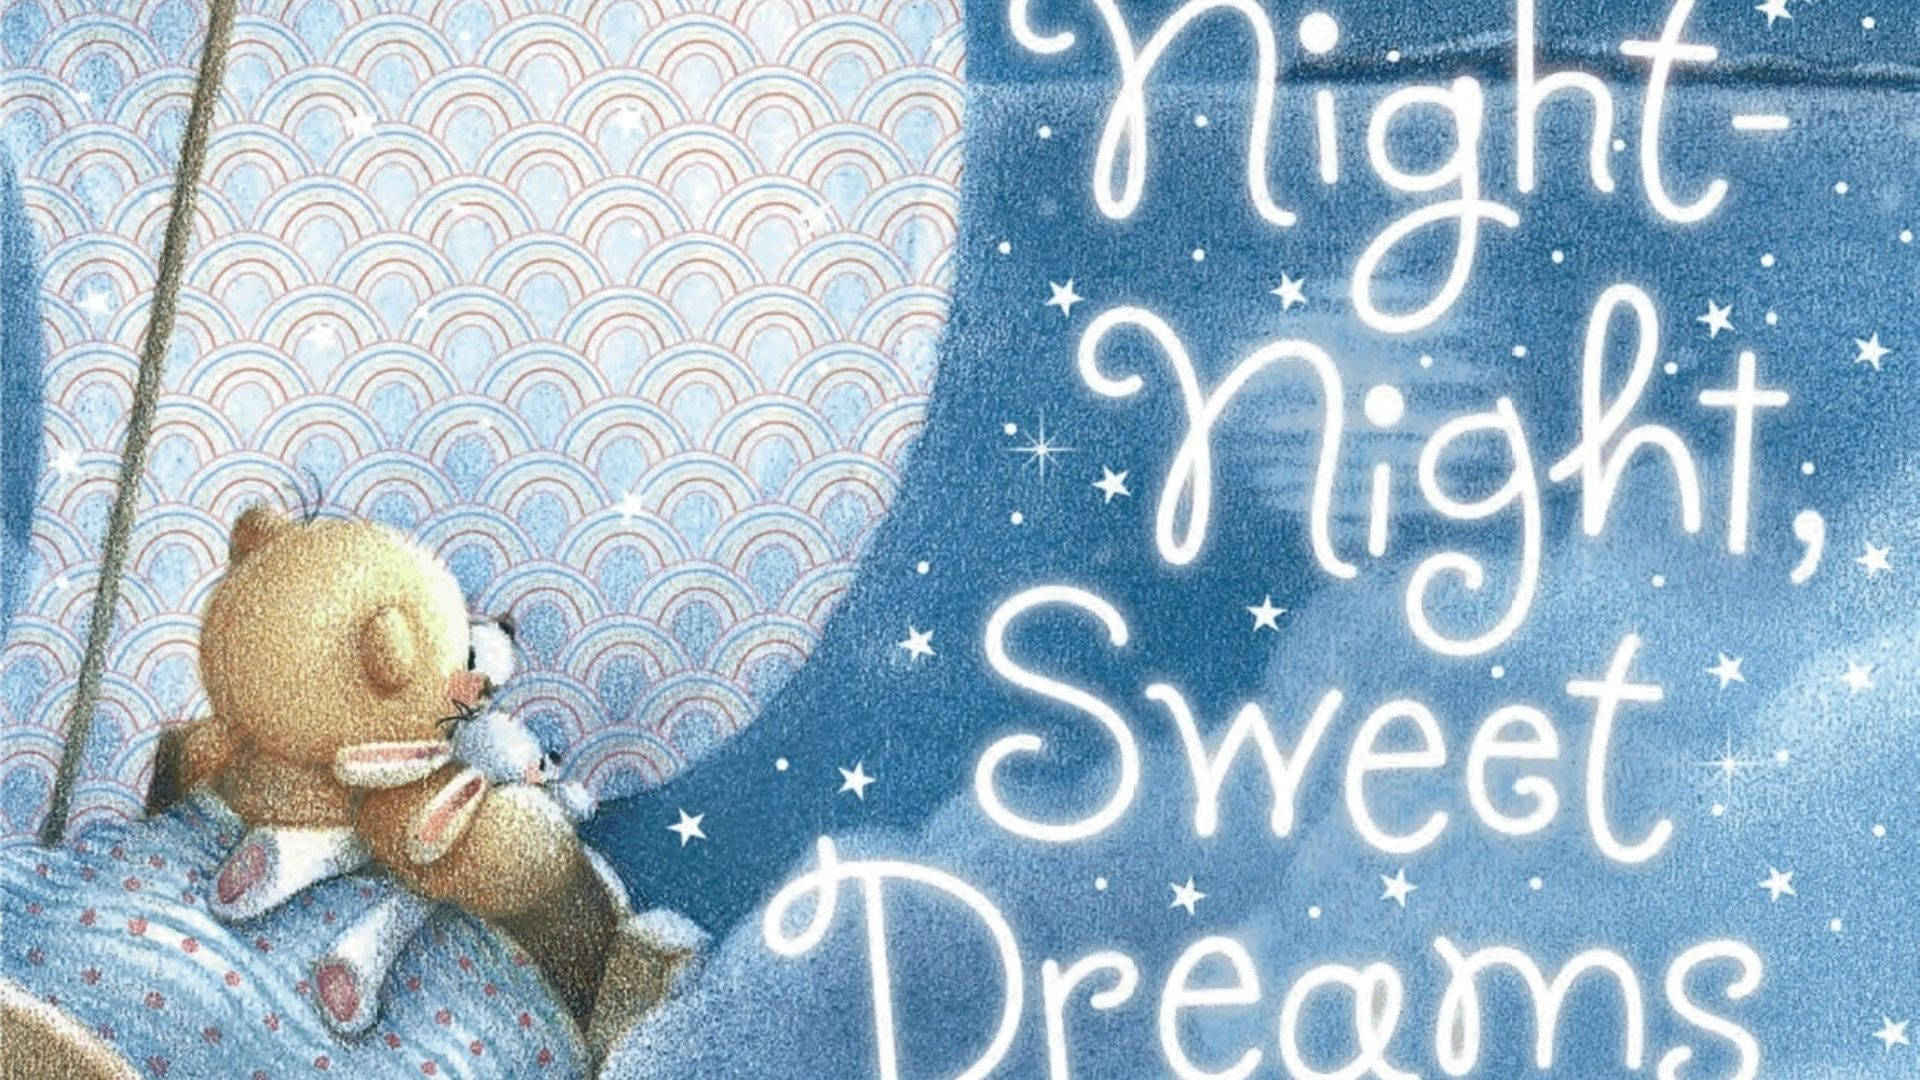 Sweet Dreams With Teddy Bear